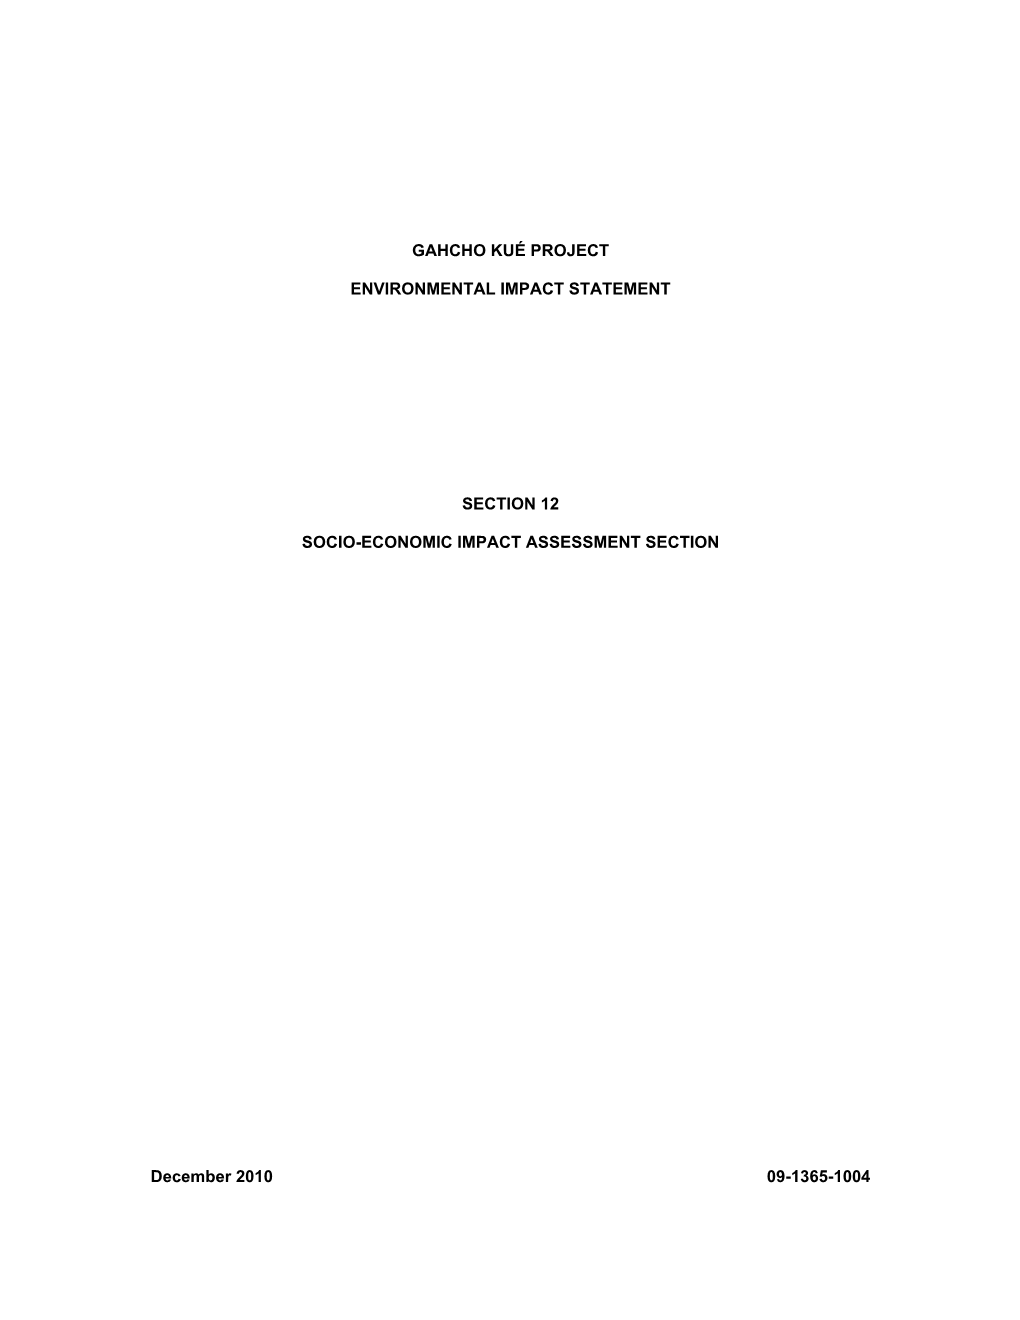 Socio-Economic Impact Assessment Section